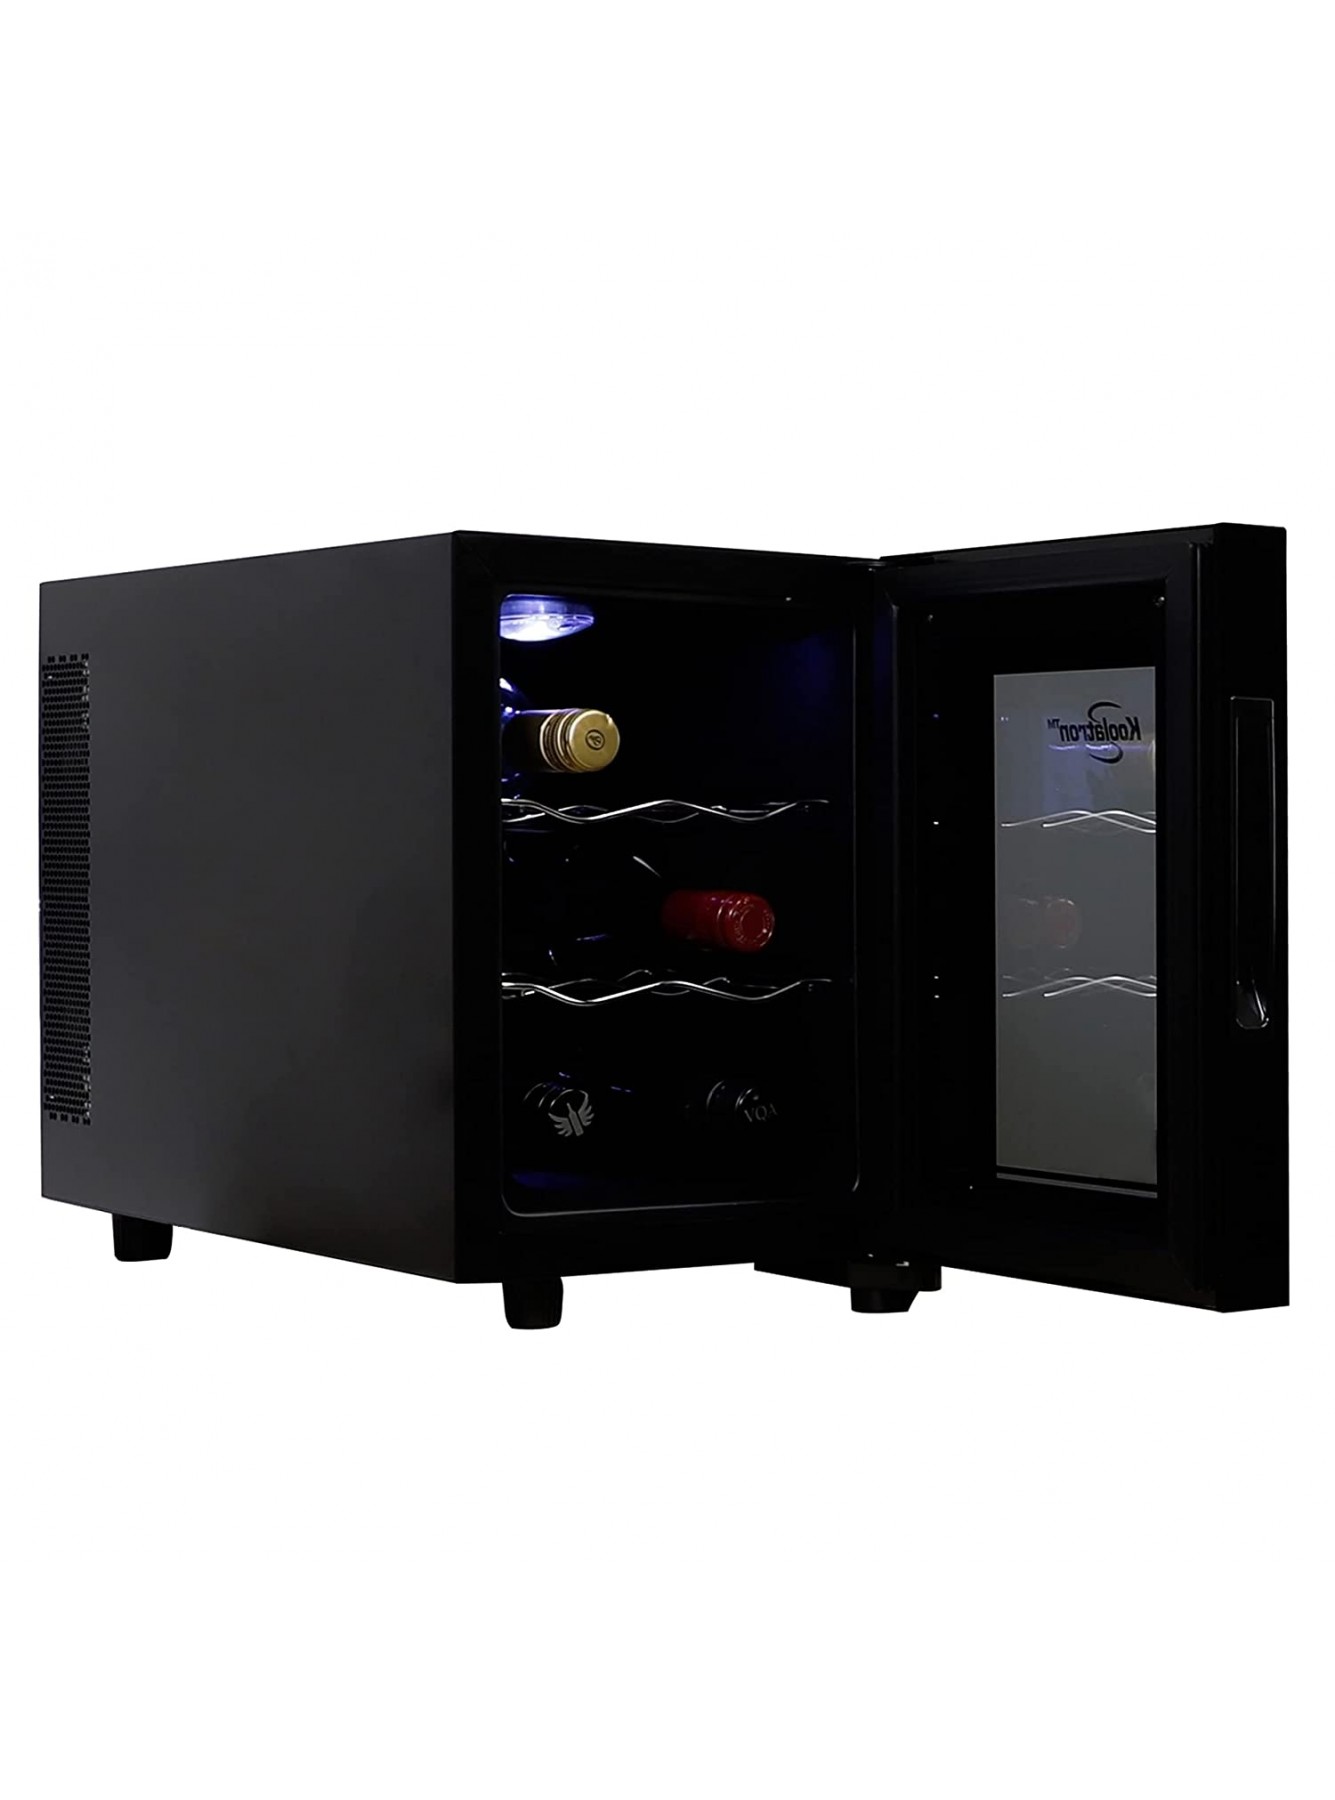 Koolatron Urban Series 6 Bottle Wine Cooler Thermoelectric Wine Fridge 0.65 cu. ft. Freestanding Wine Refrigerator for Small Kitchen Apartment Condo Cottage RV Black B09D3VZJ3V